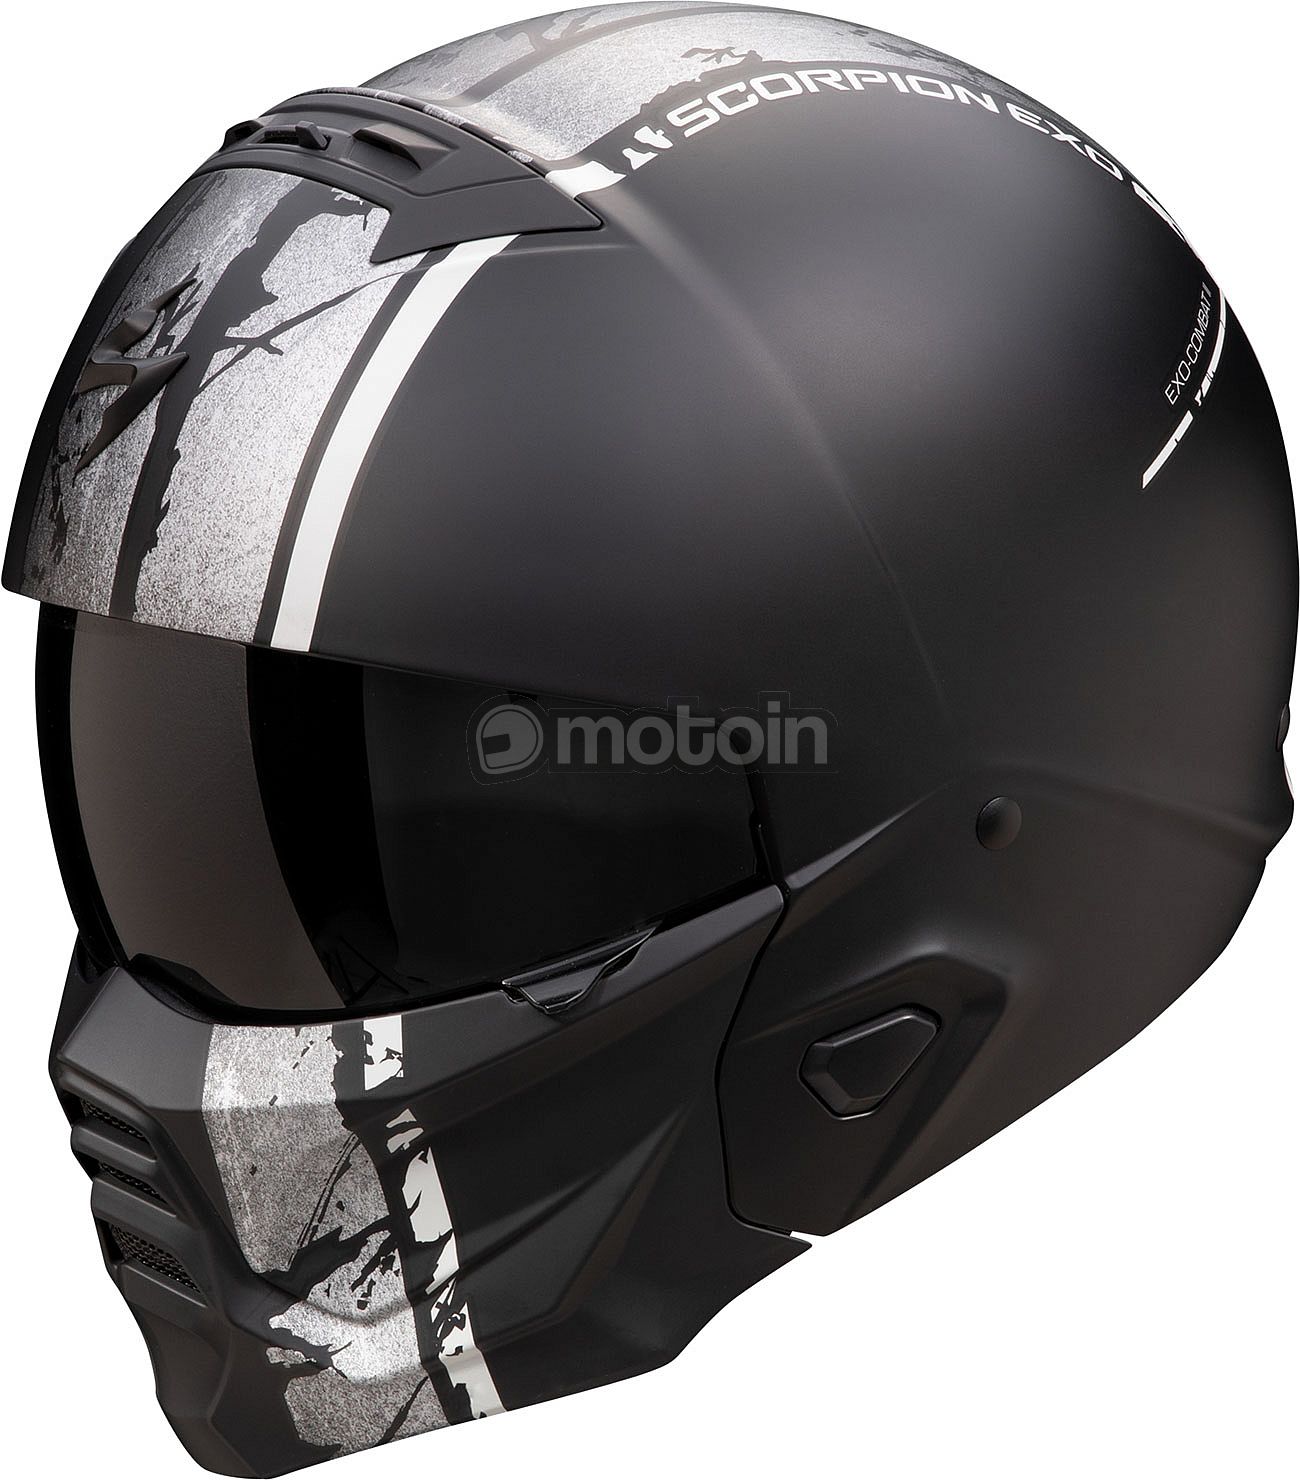 Scorpion EXO-Combat II Lord, modulær hjelm